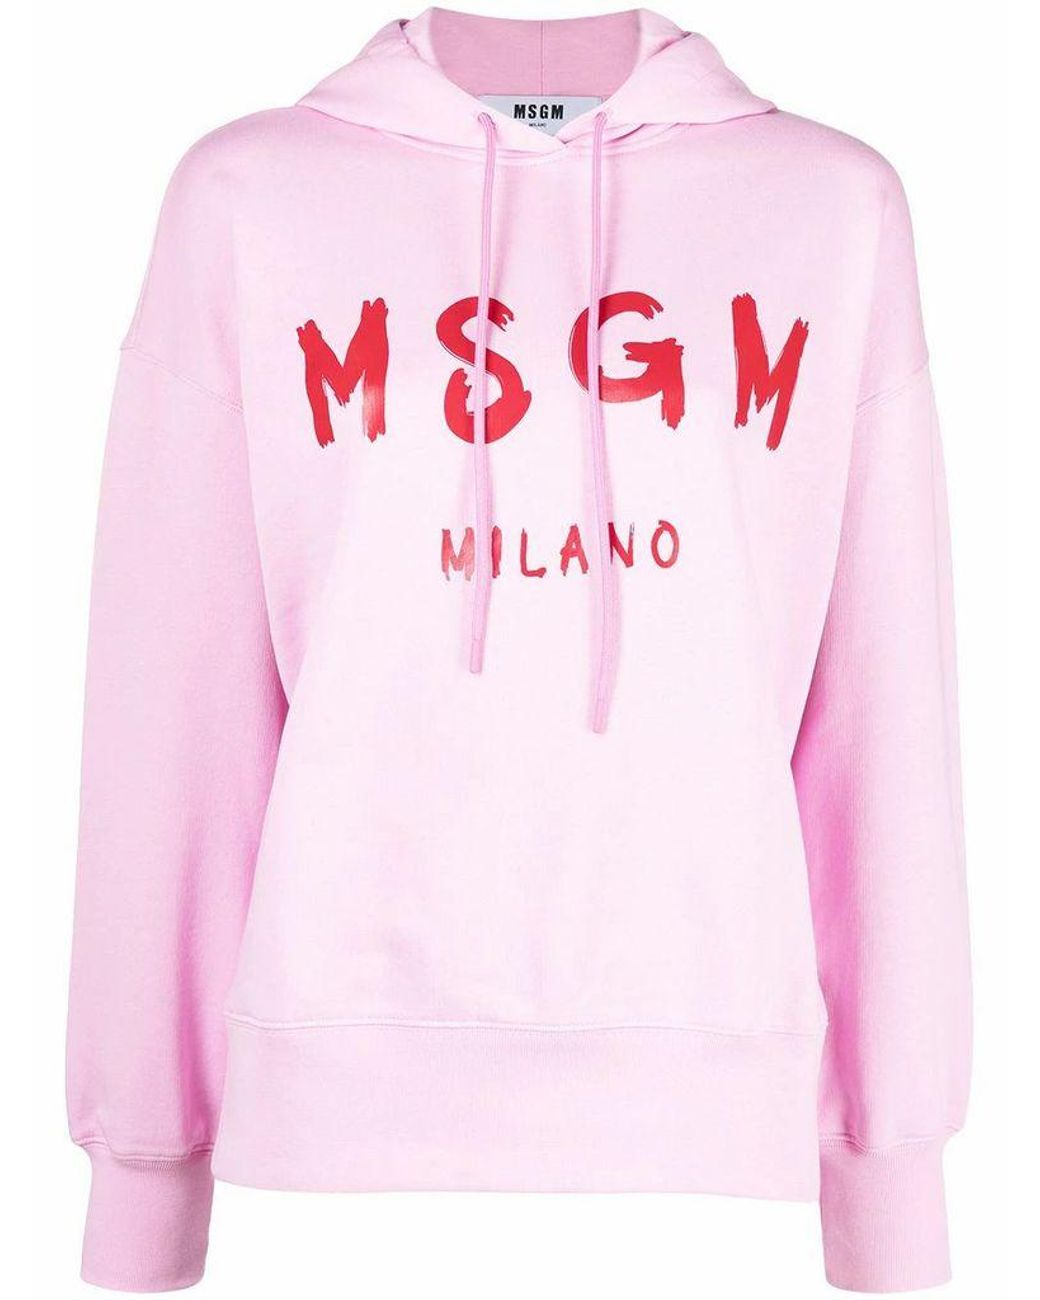 MSGM Women's 3041mdm8821729912 Pink Cotton Sweatshirt - Lyst